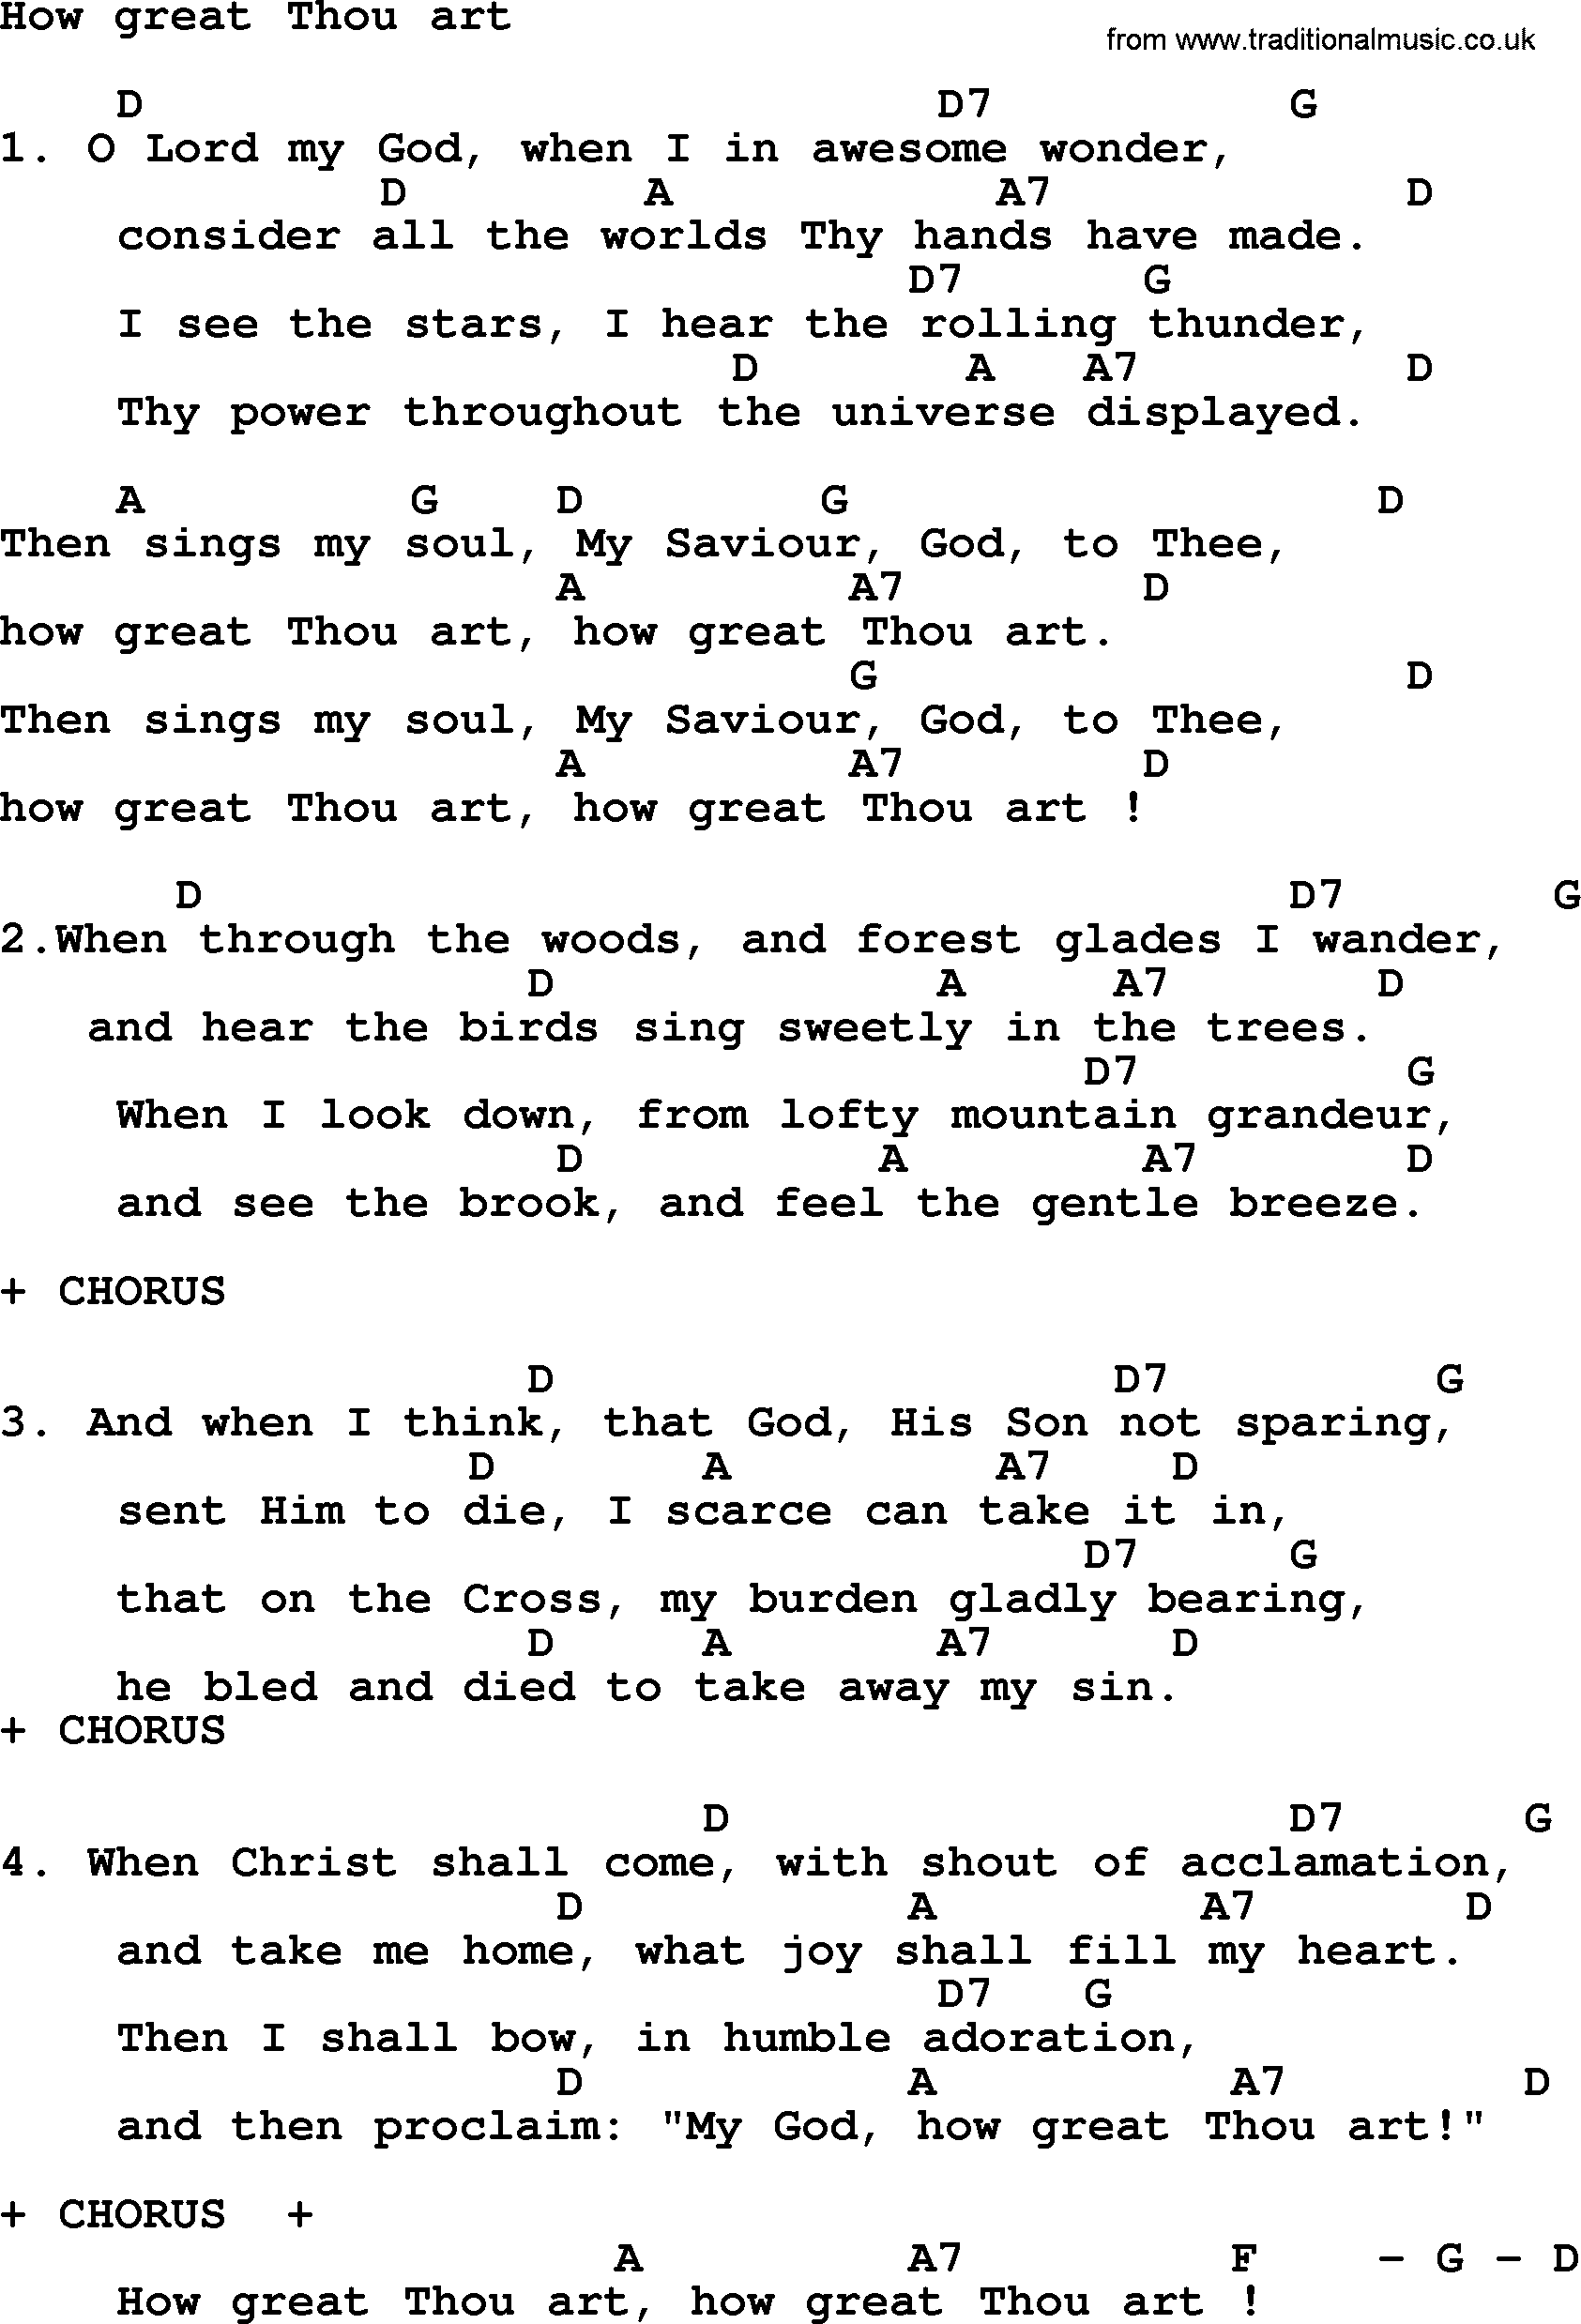 Lyrics For How Great Thou Art - LyricsWalls